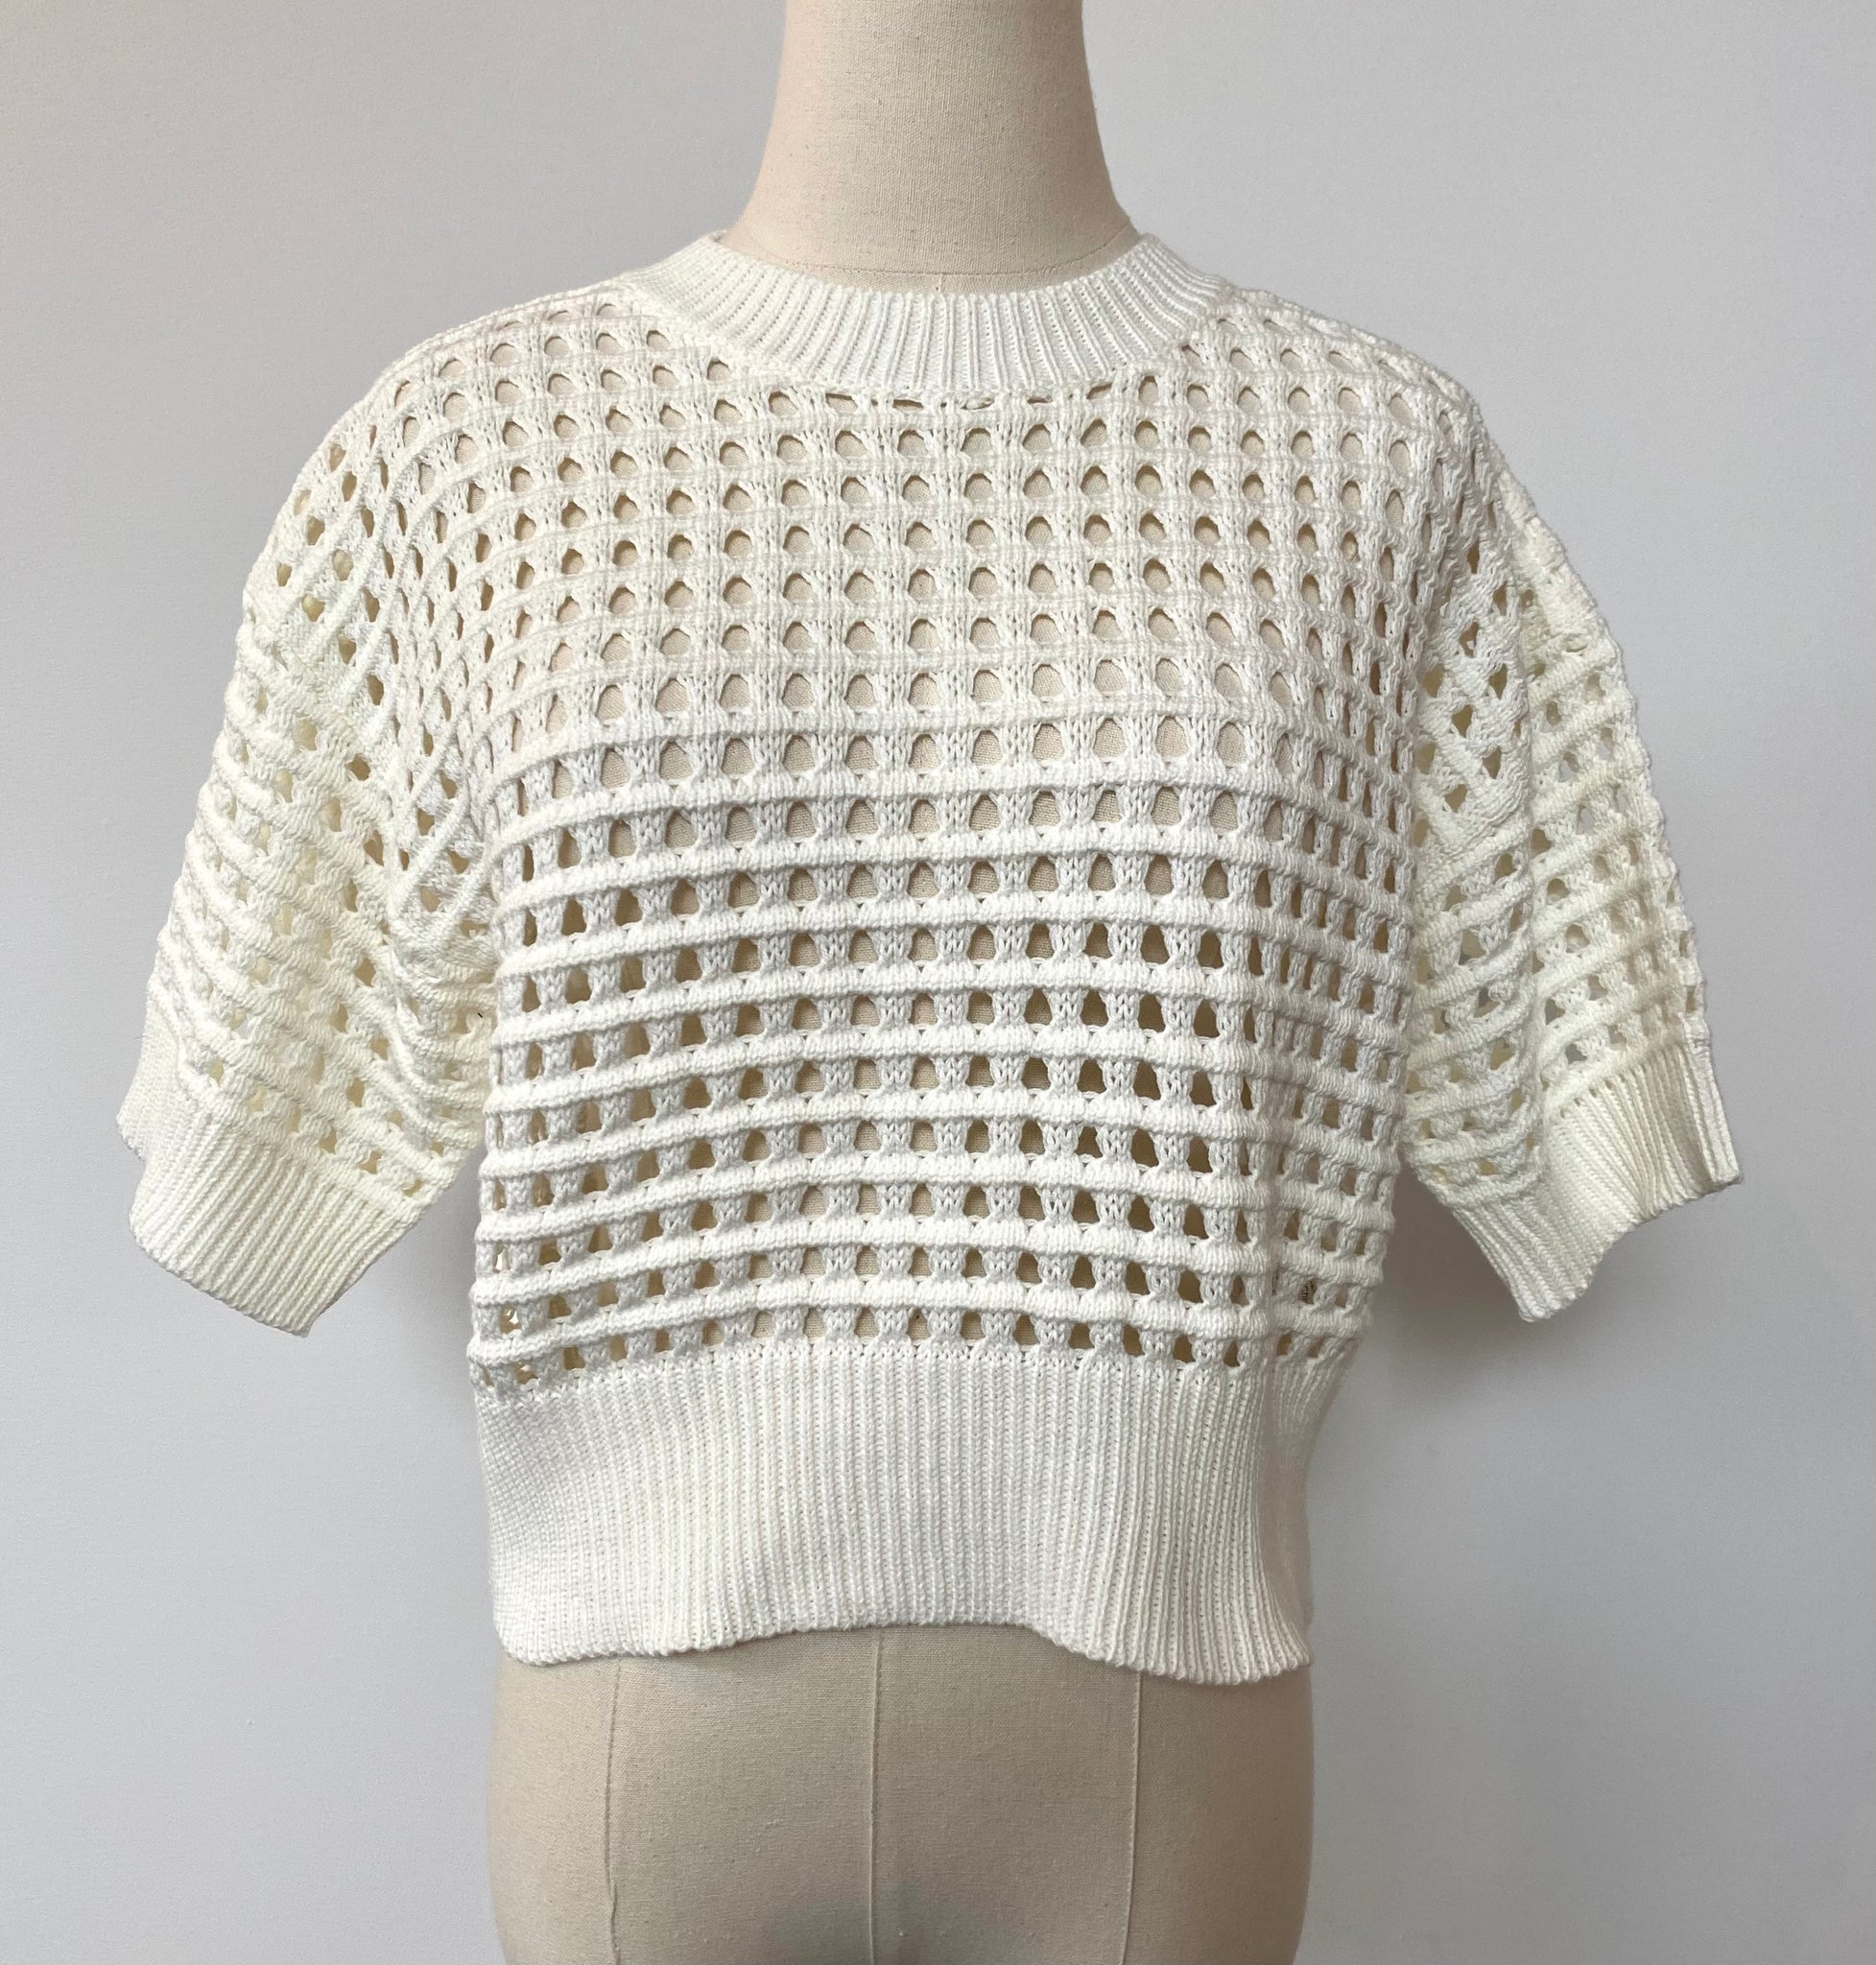 Alina Short Sleeve Crochet Top